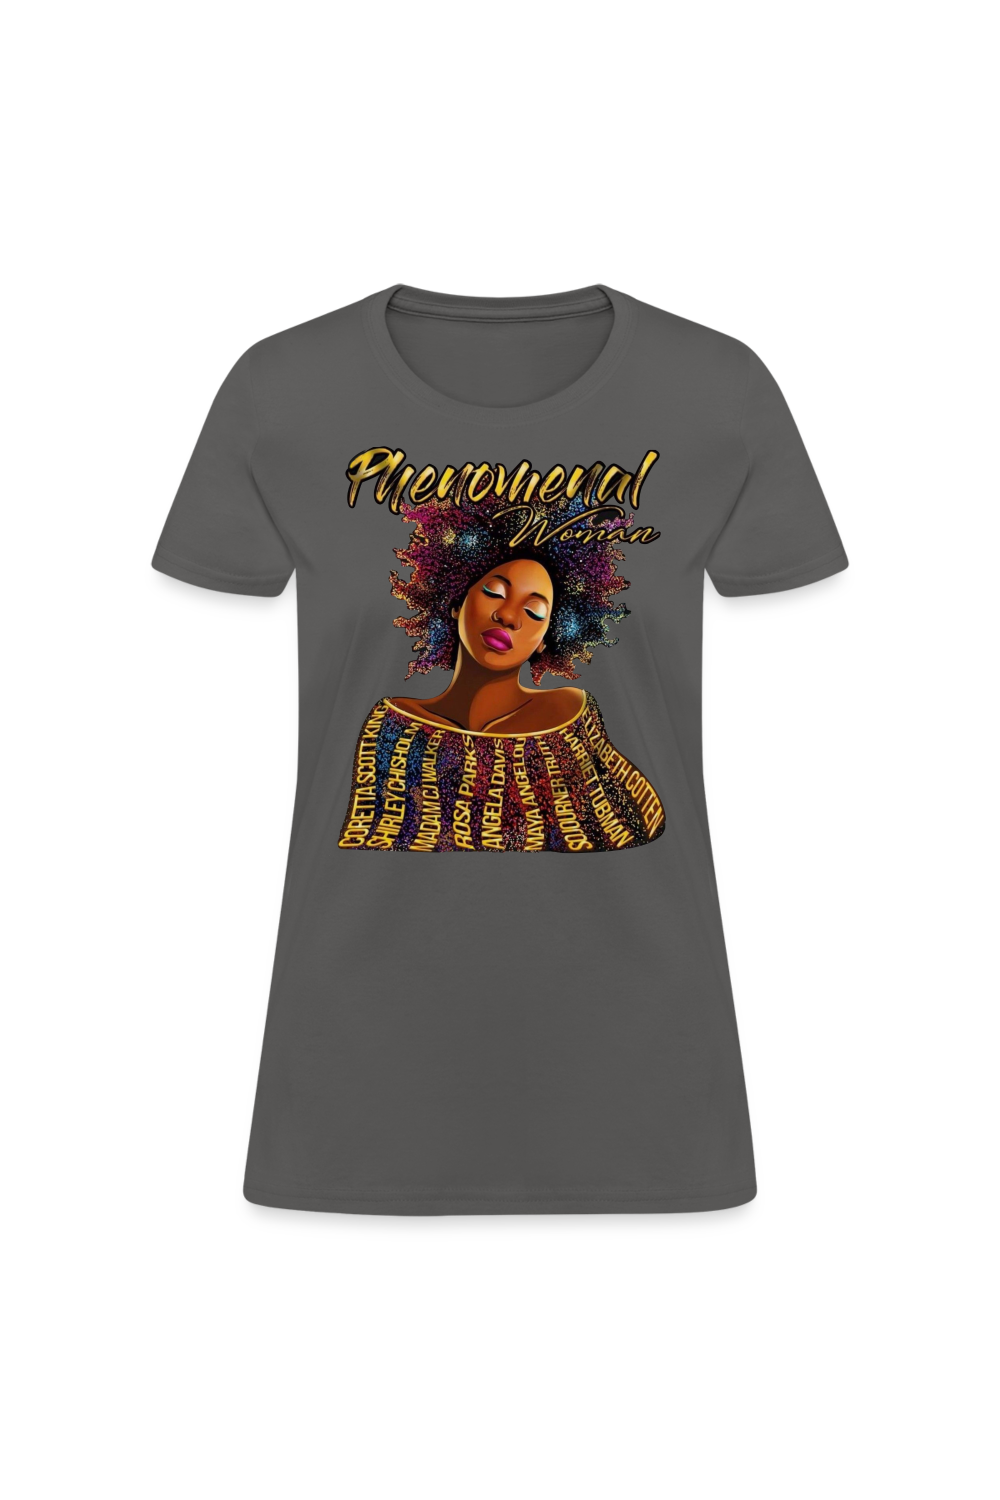 African American Women's Phenomenal Woman Short Sleeve T-Shirt - charcoal